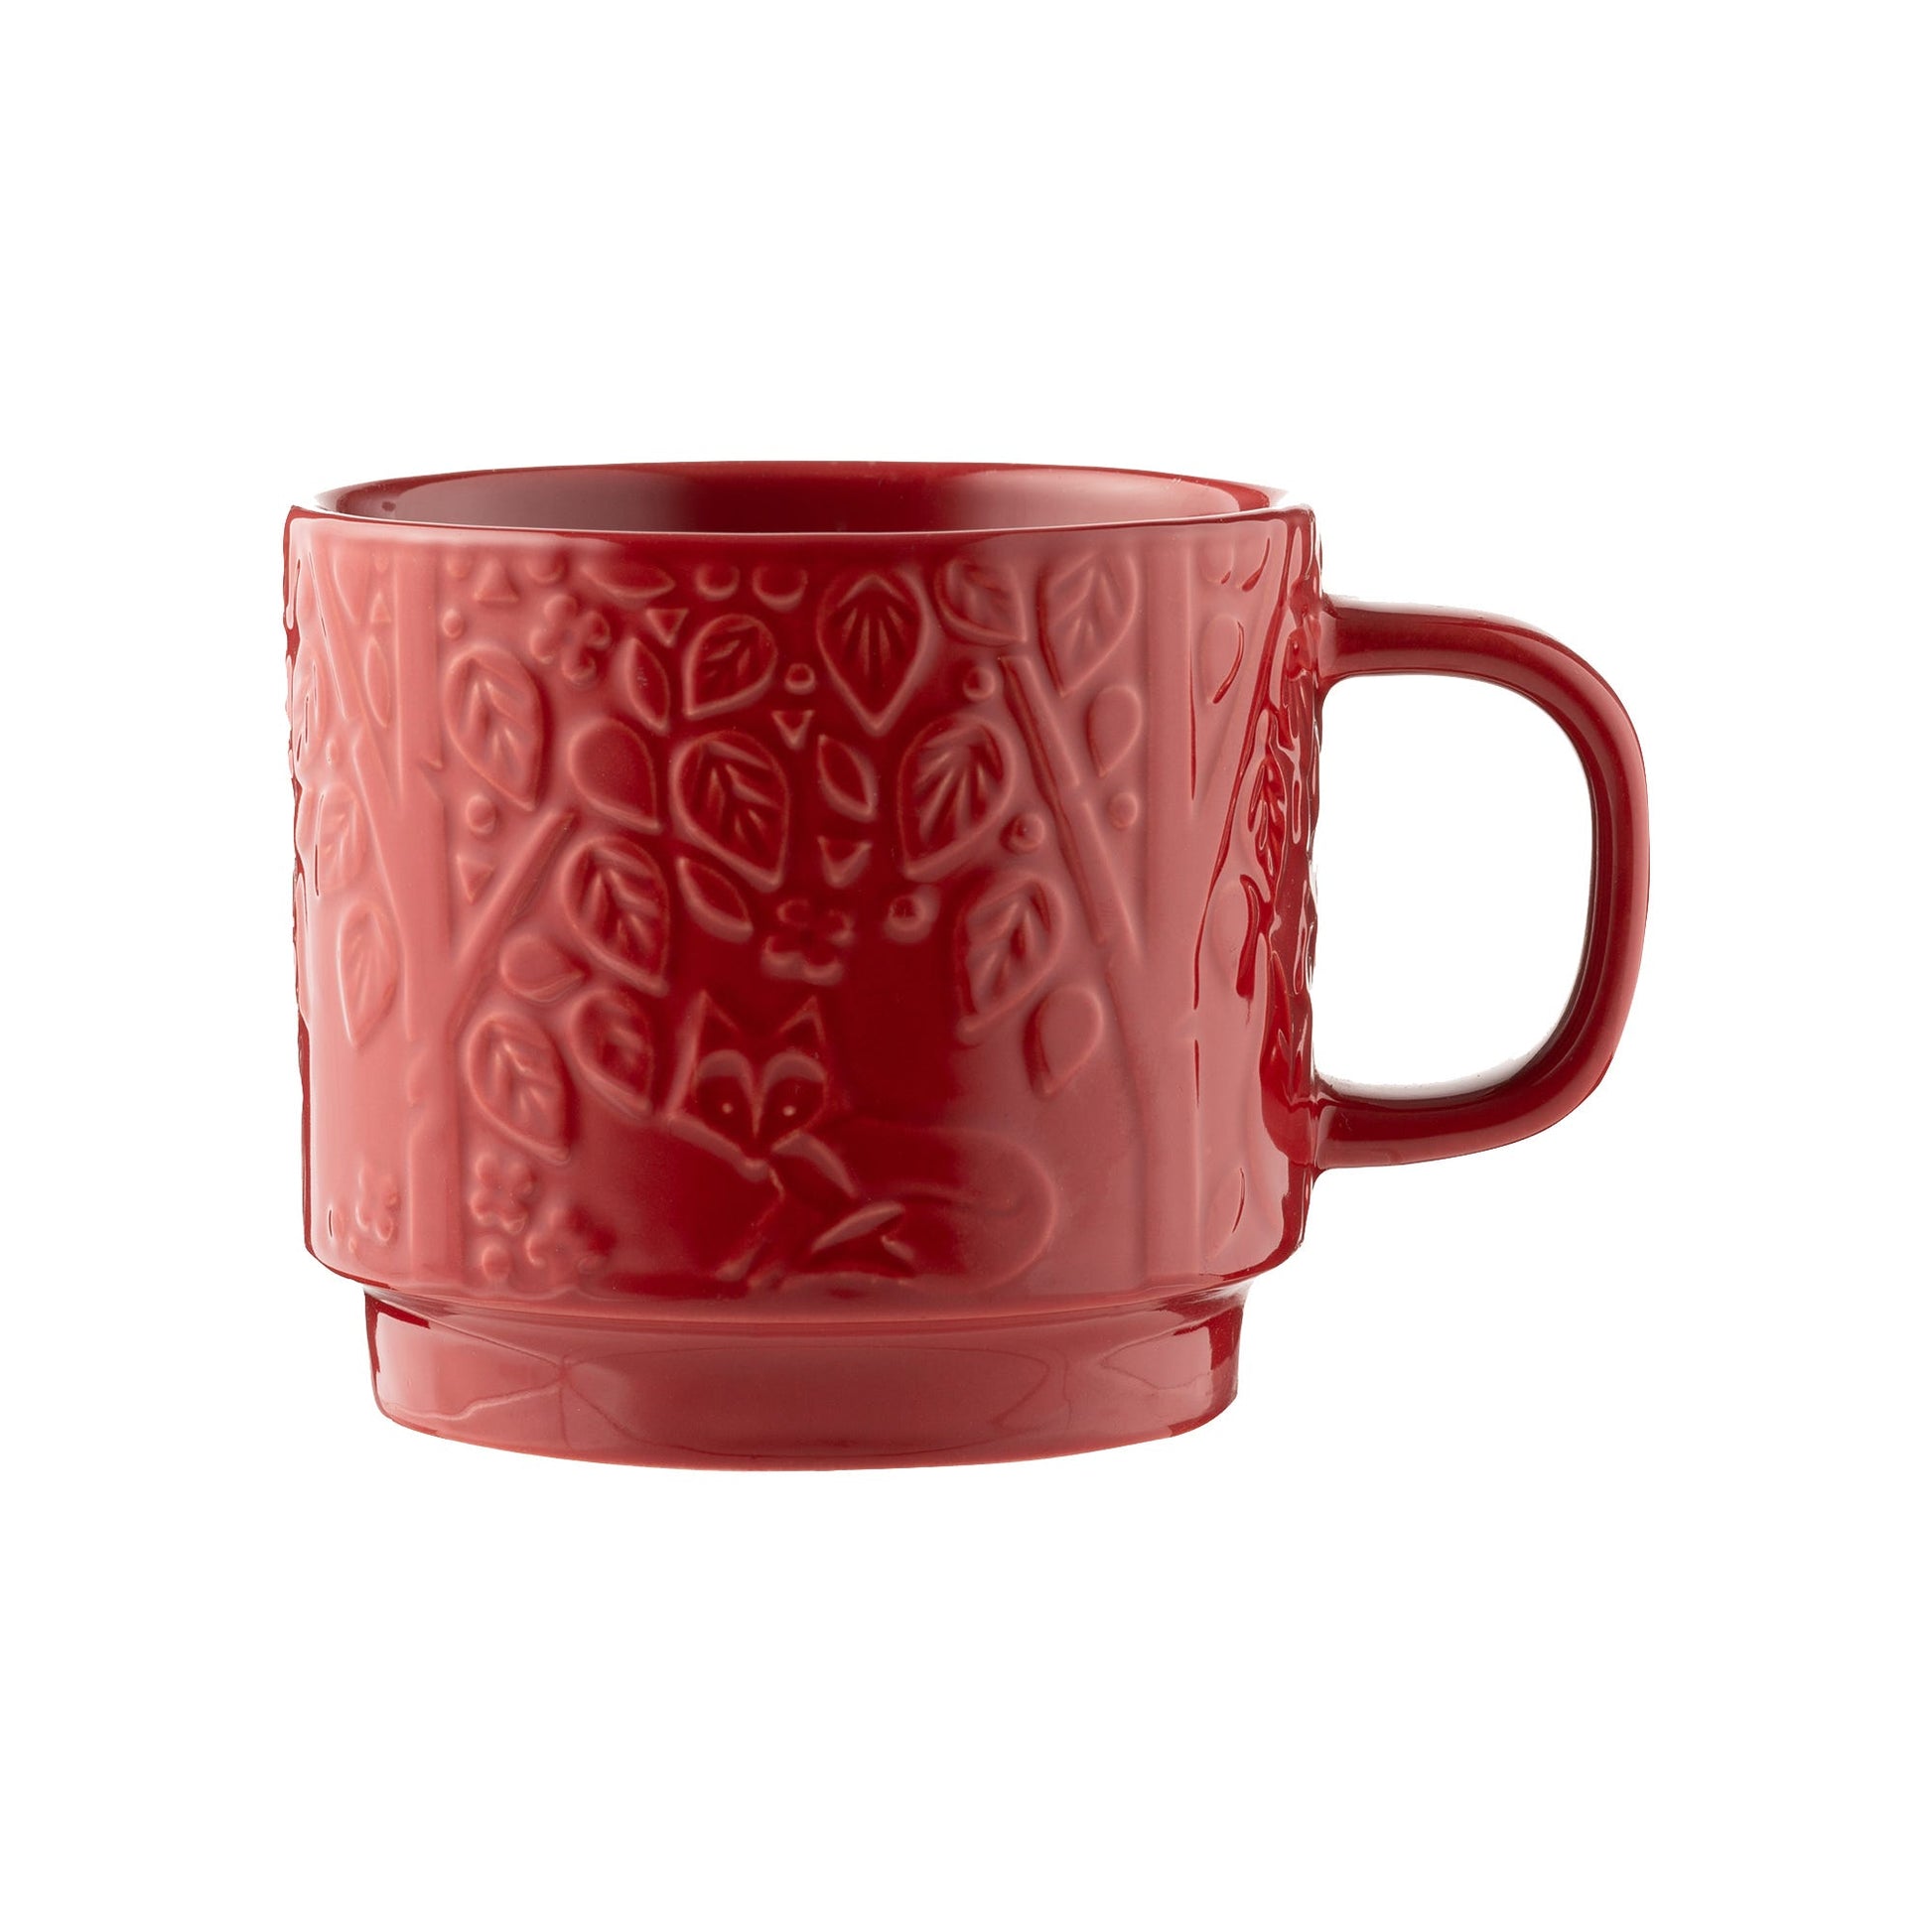 300ml Red Forest Theme Mug